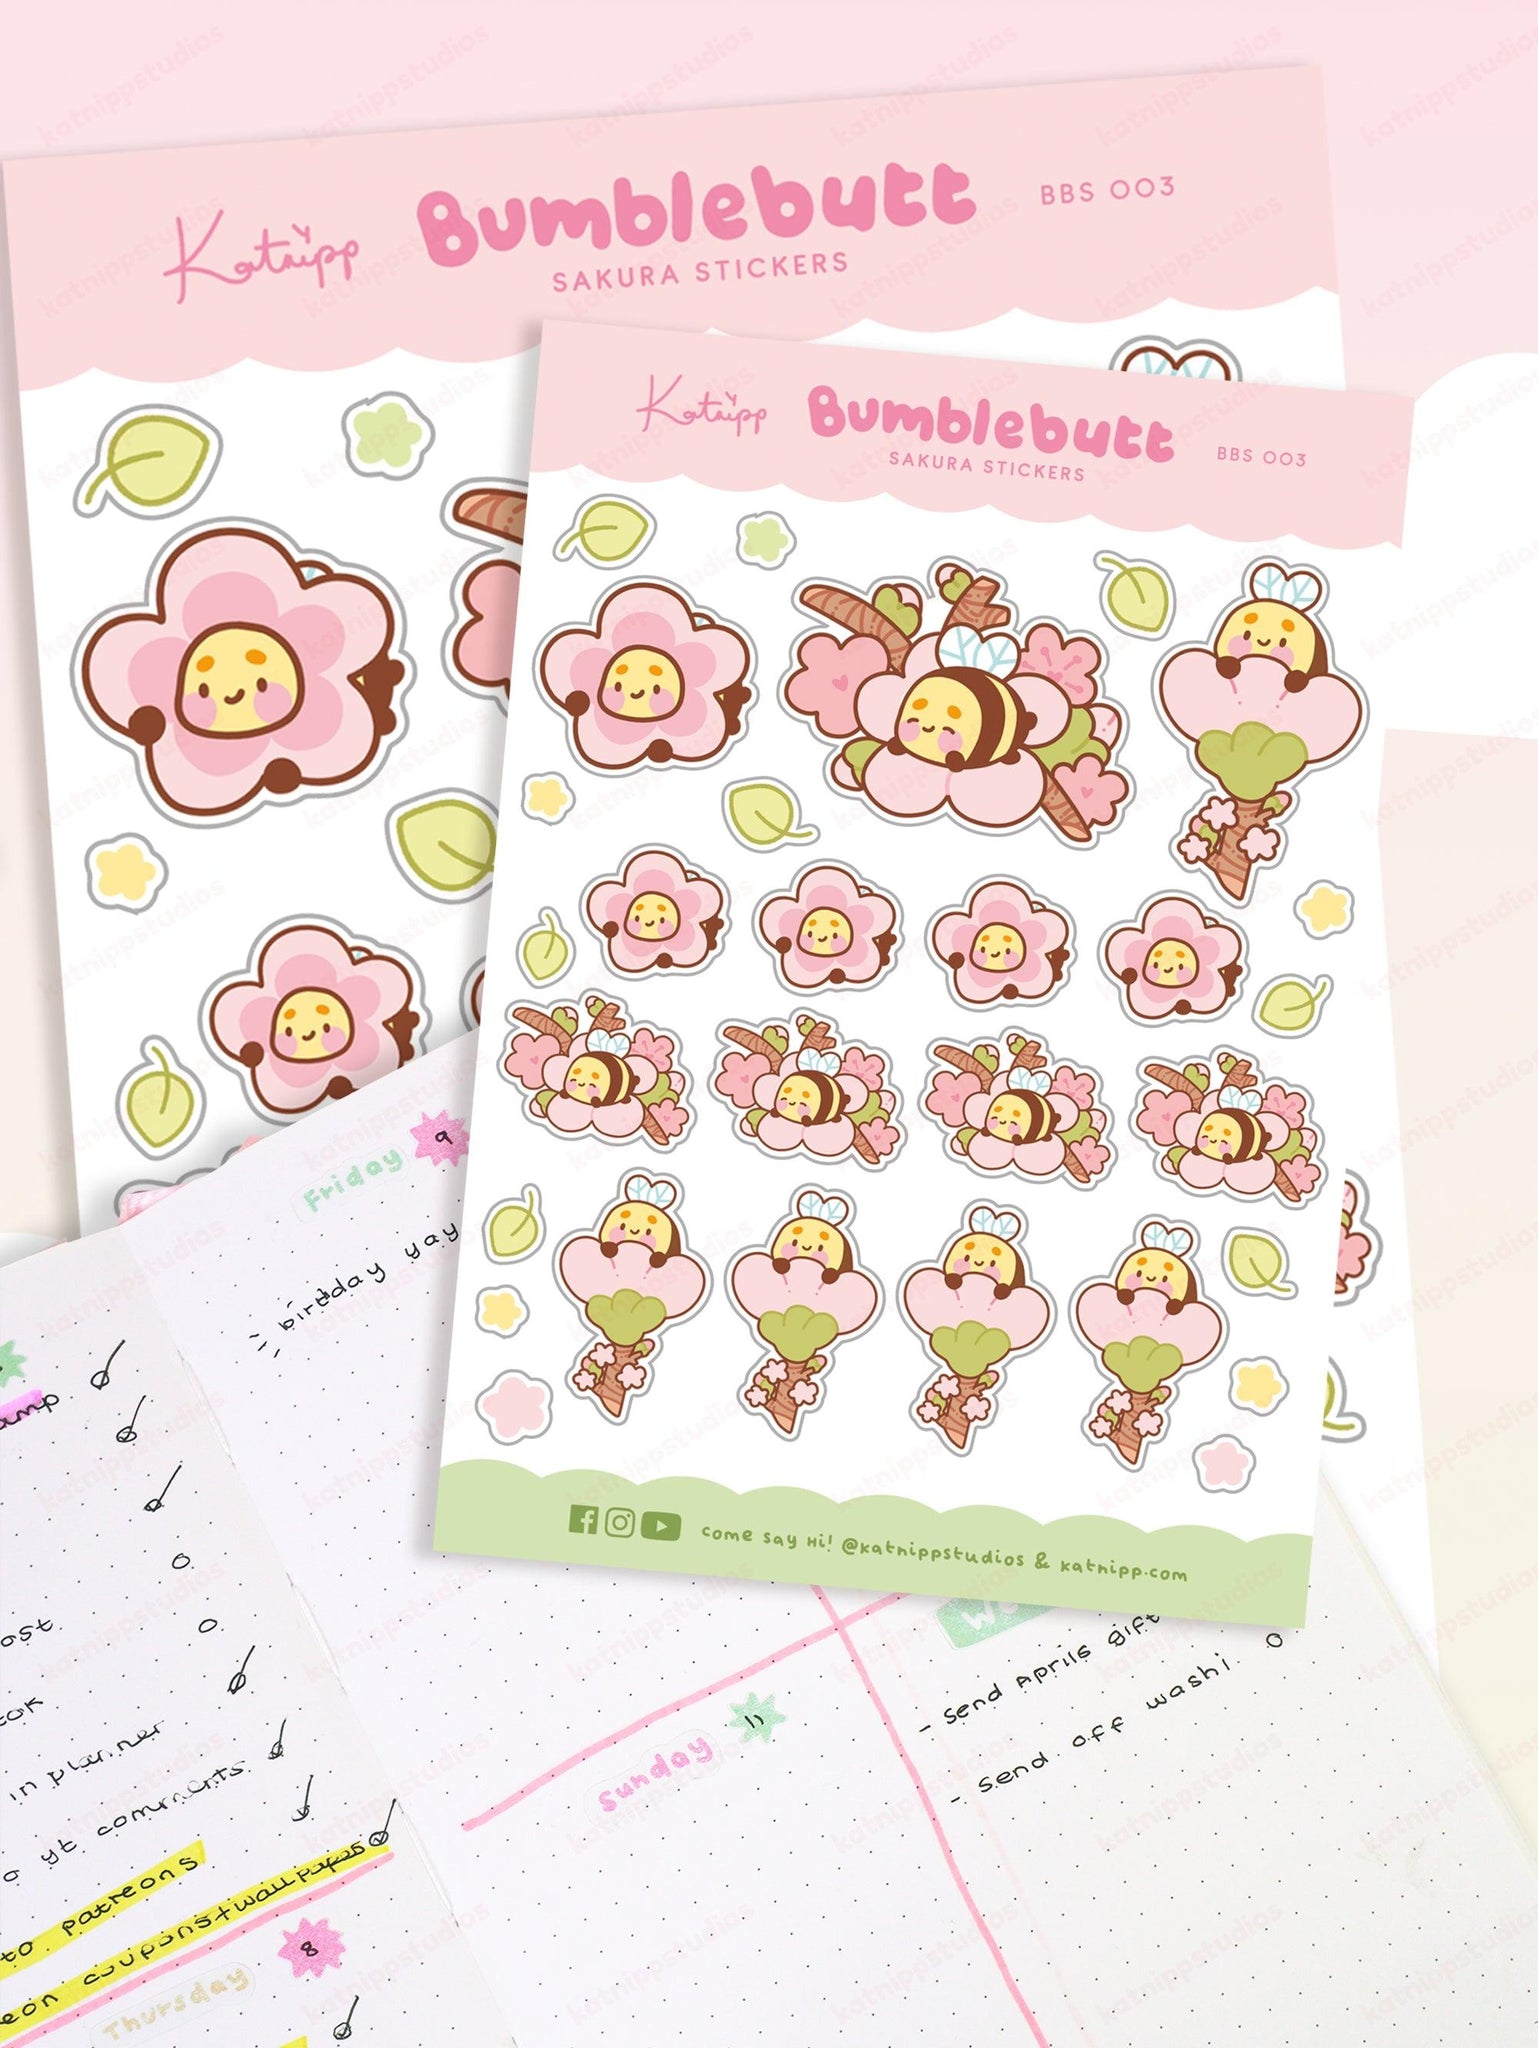 Bumblebutt Sakura Planner Sticker Sheet - BBS 003 - Katnipp Studios